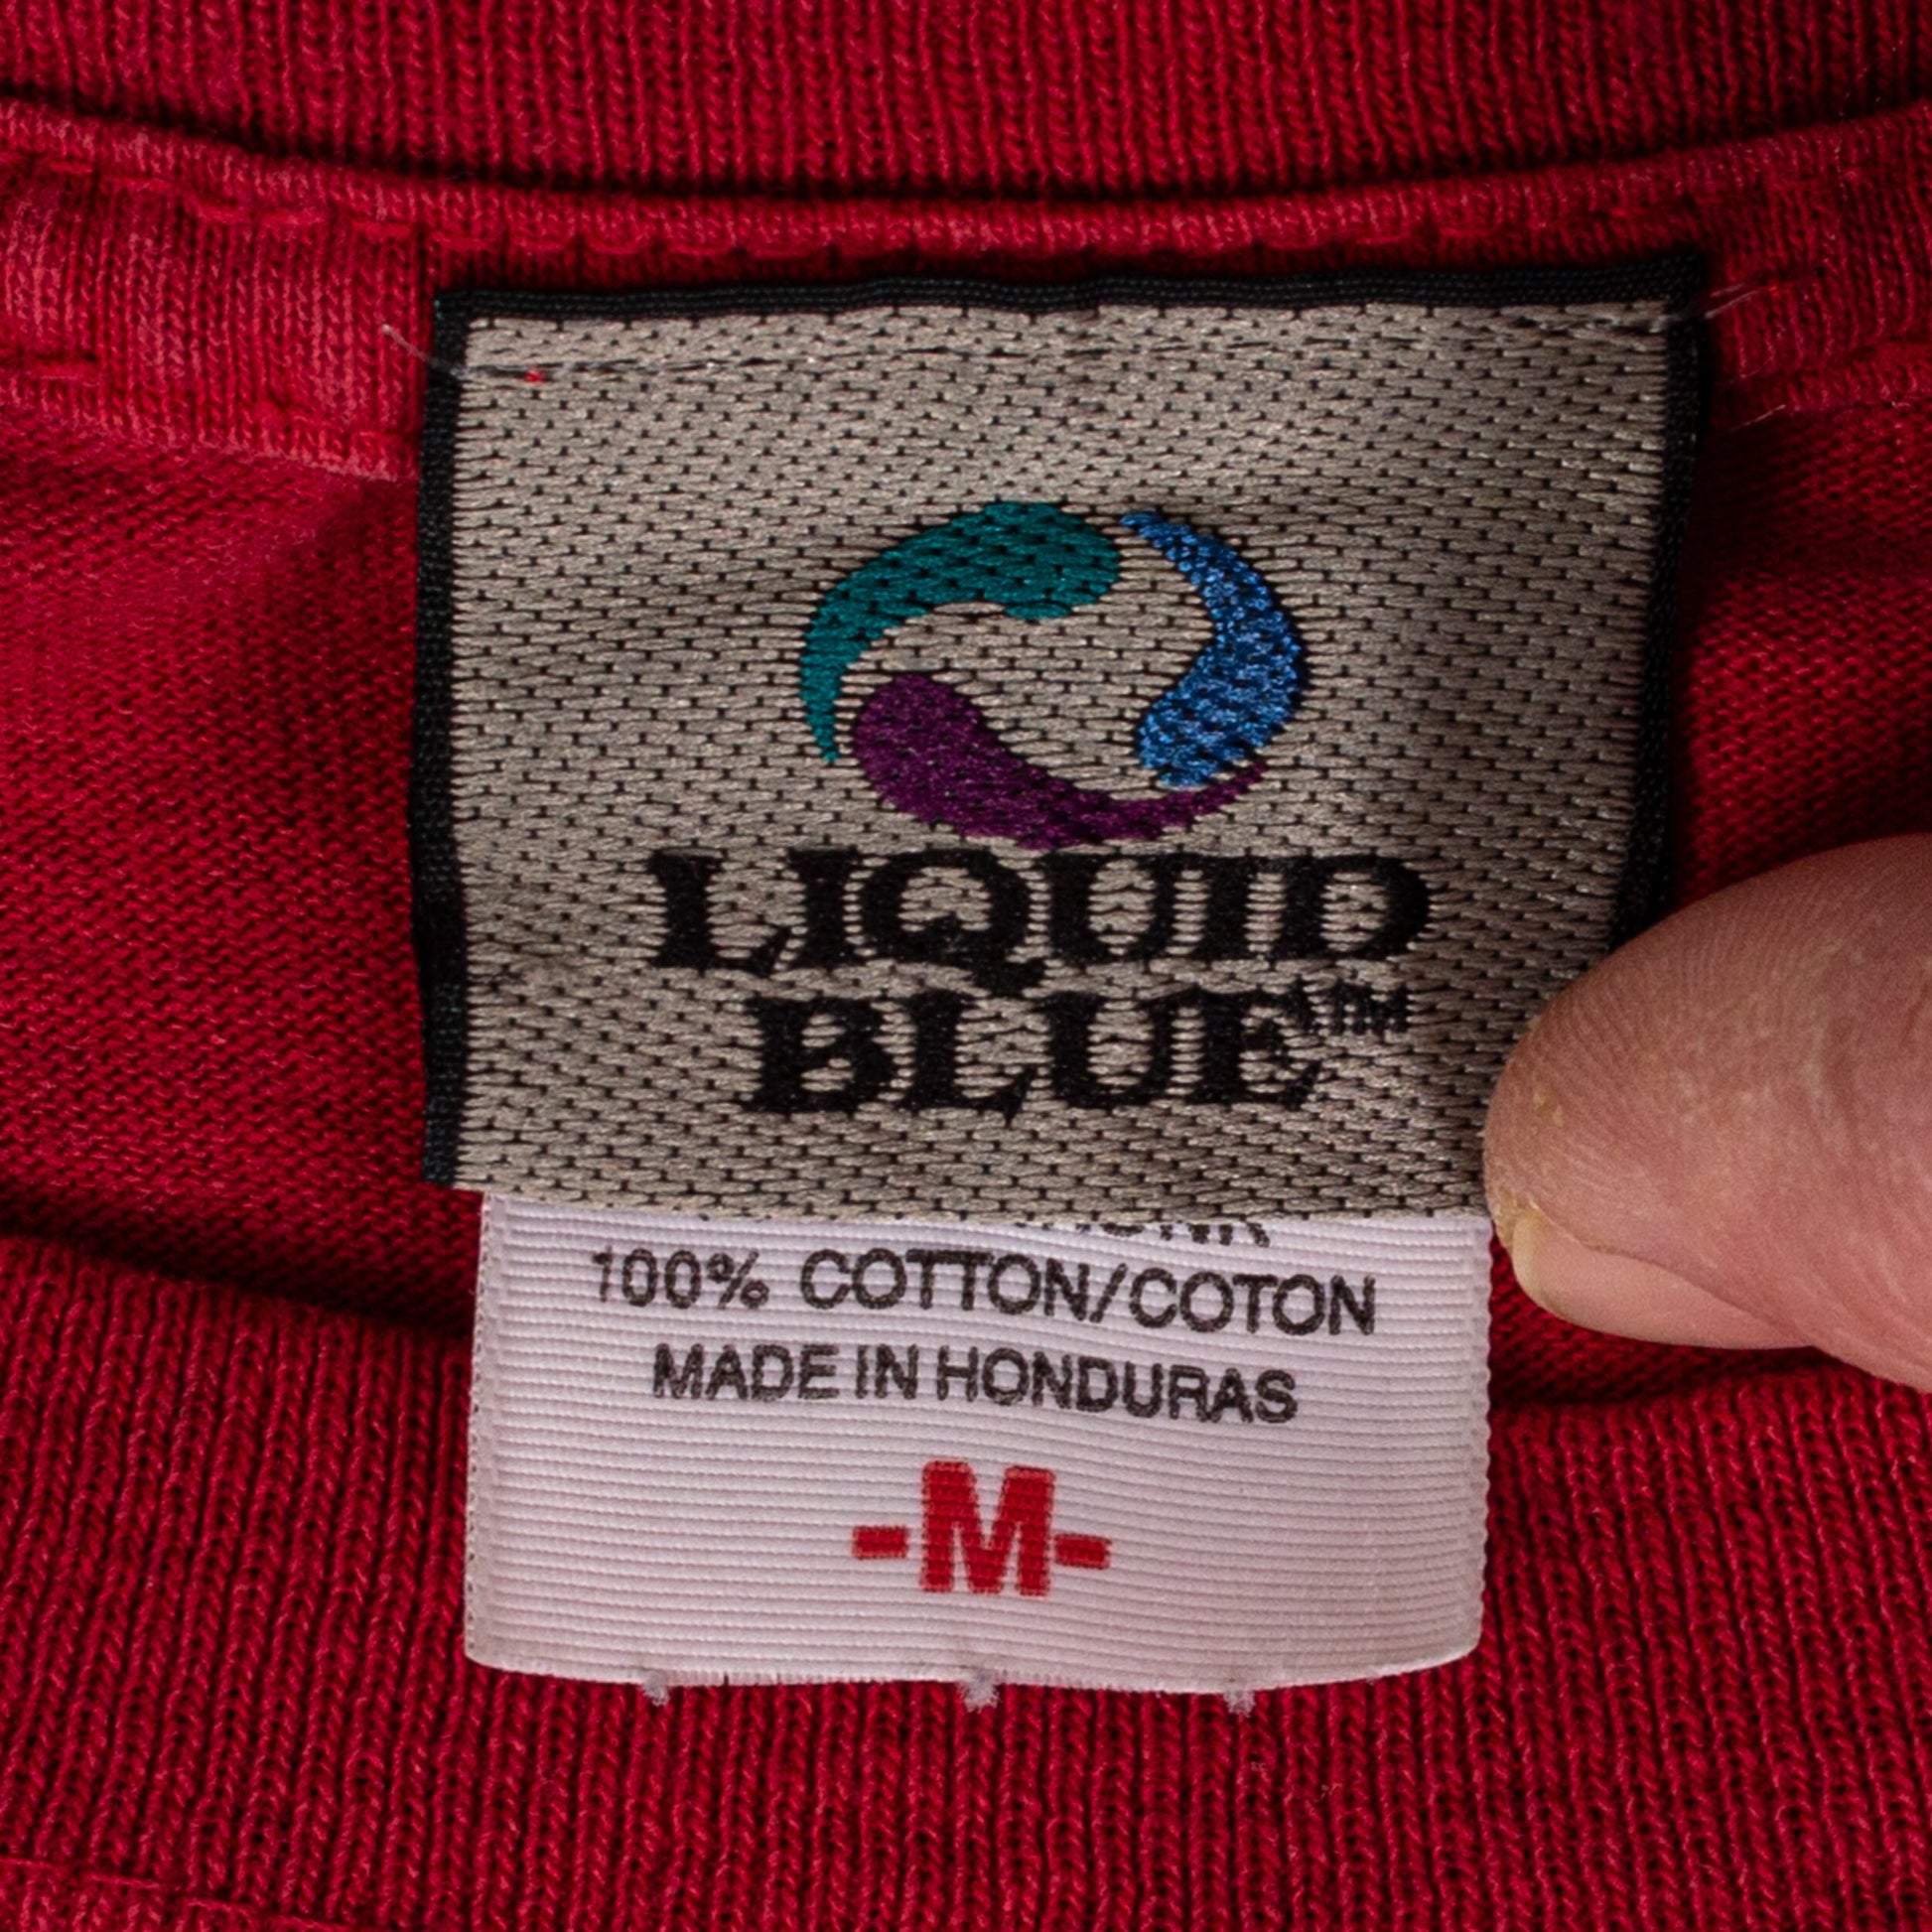 Liquid Blue Men's T-Shirt - Red - M